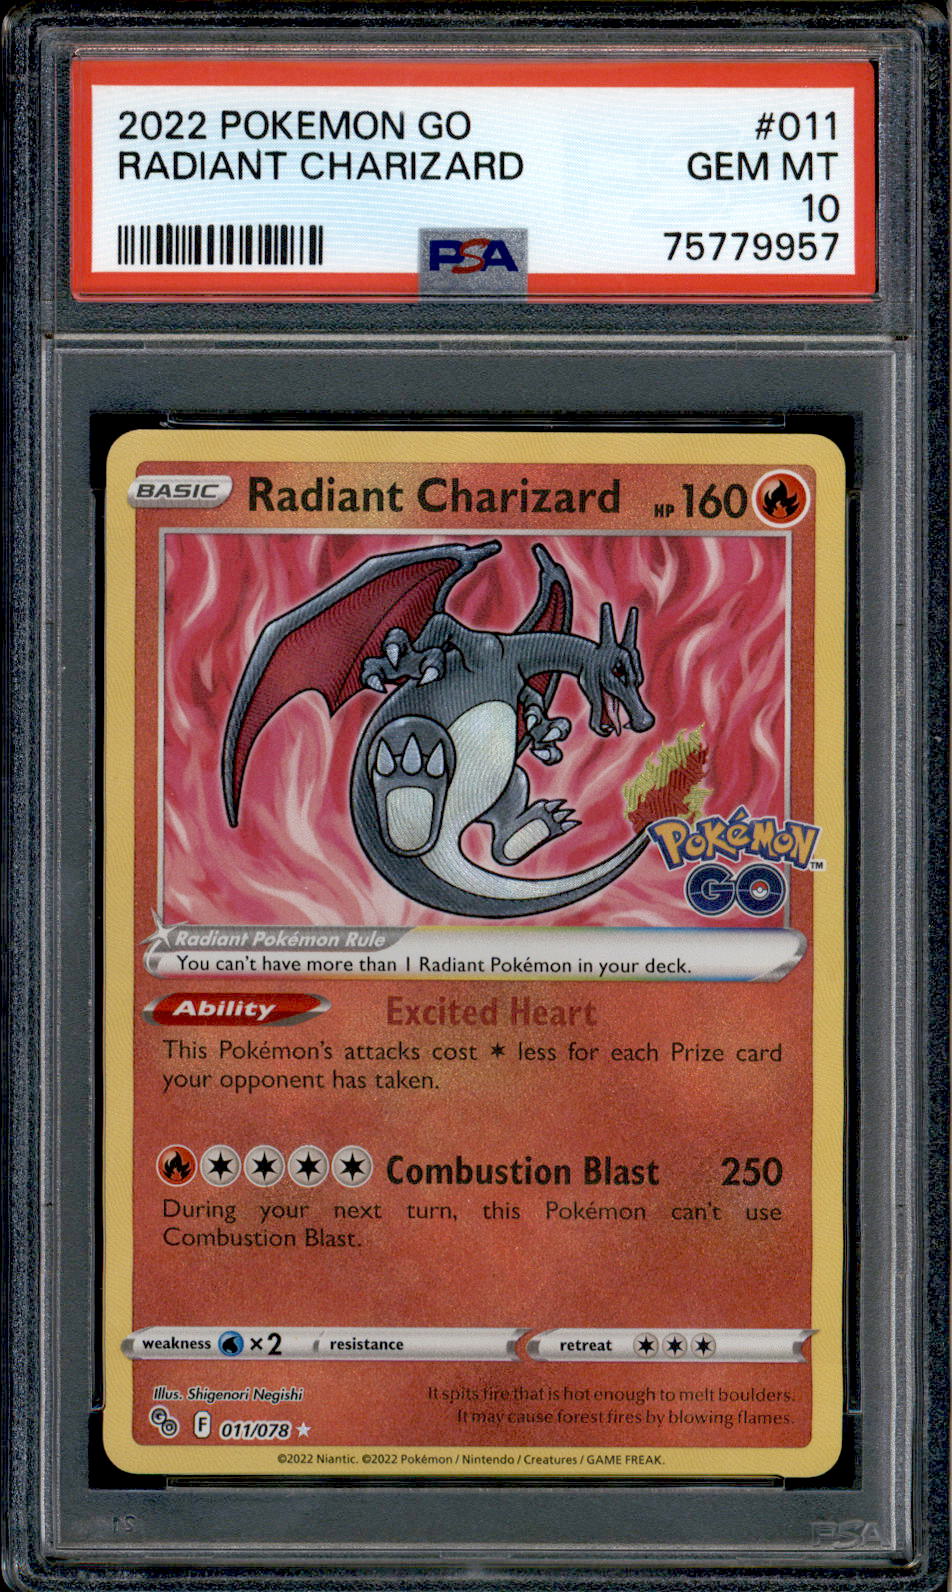 Radiant Charizard - 011/078 - PSA 10 - Ultra Rare - Pokemon GO - Pokemon -  79957